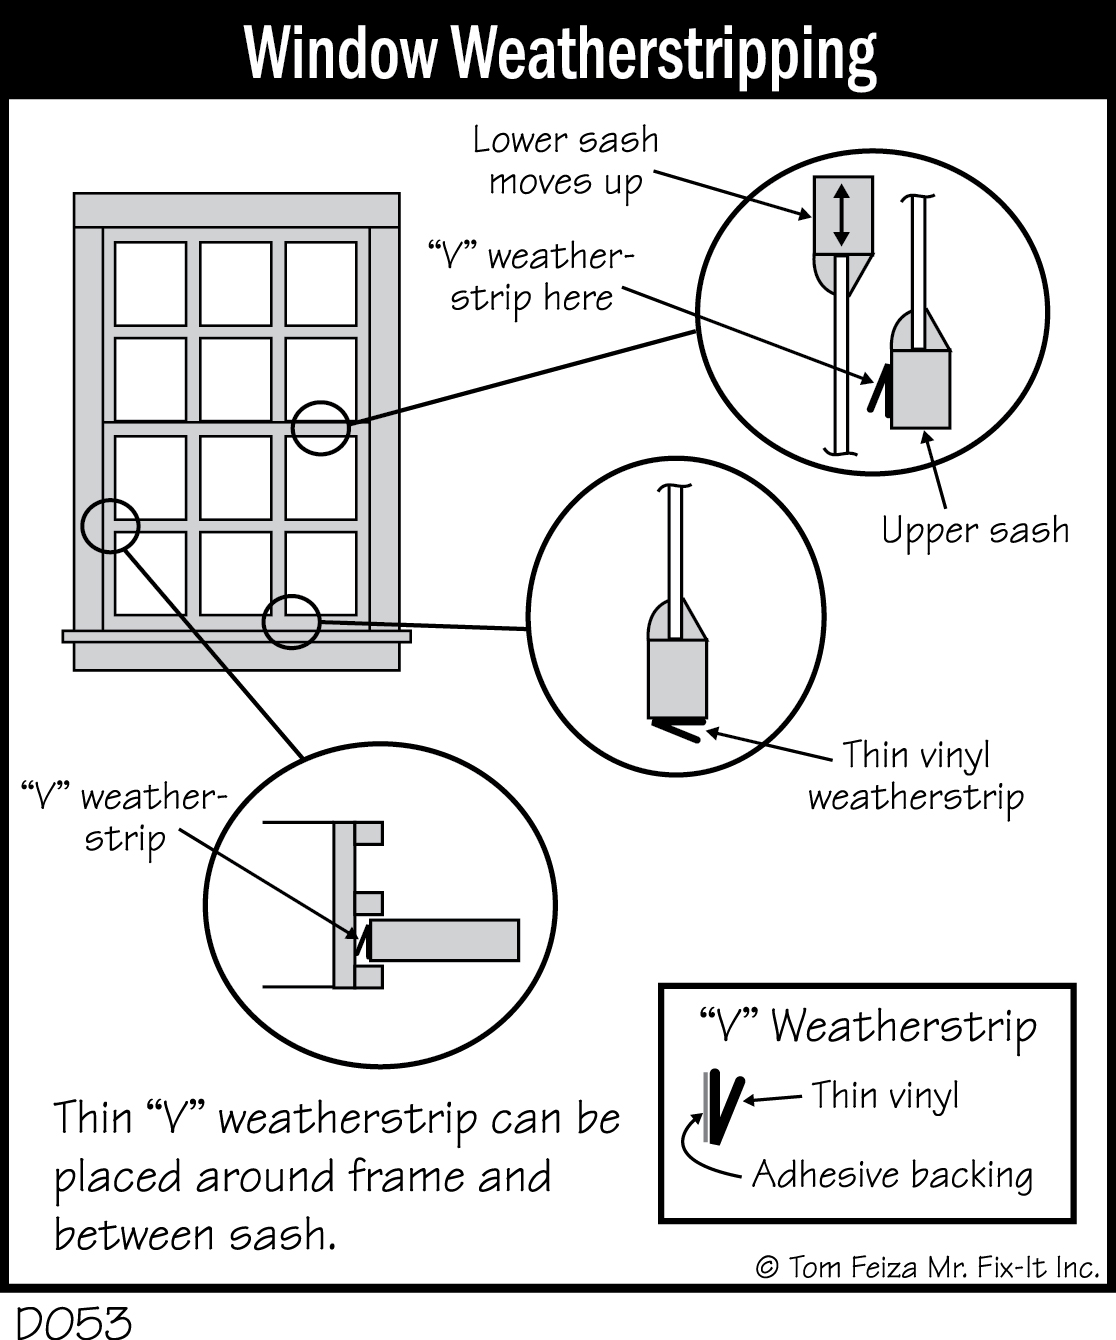 D053 - Window Weatherstripping